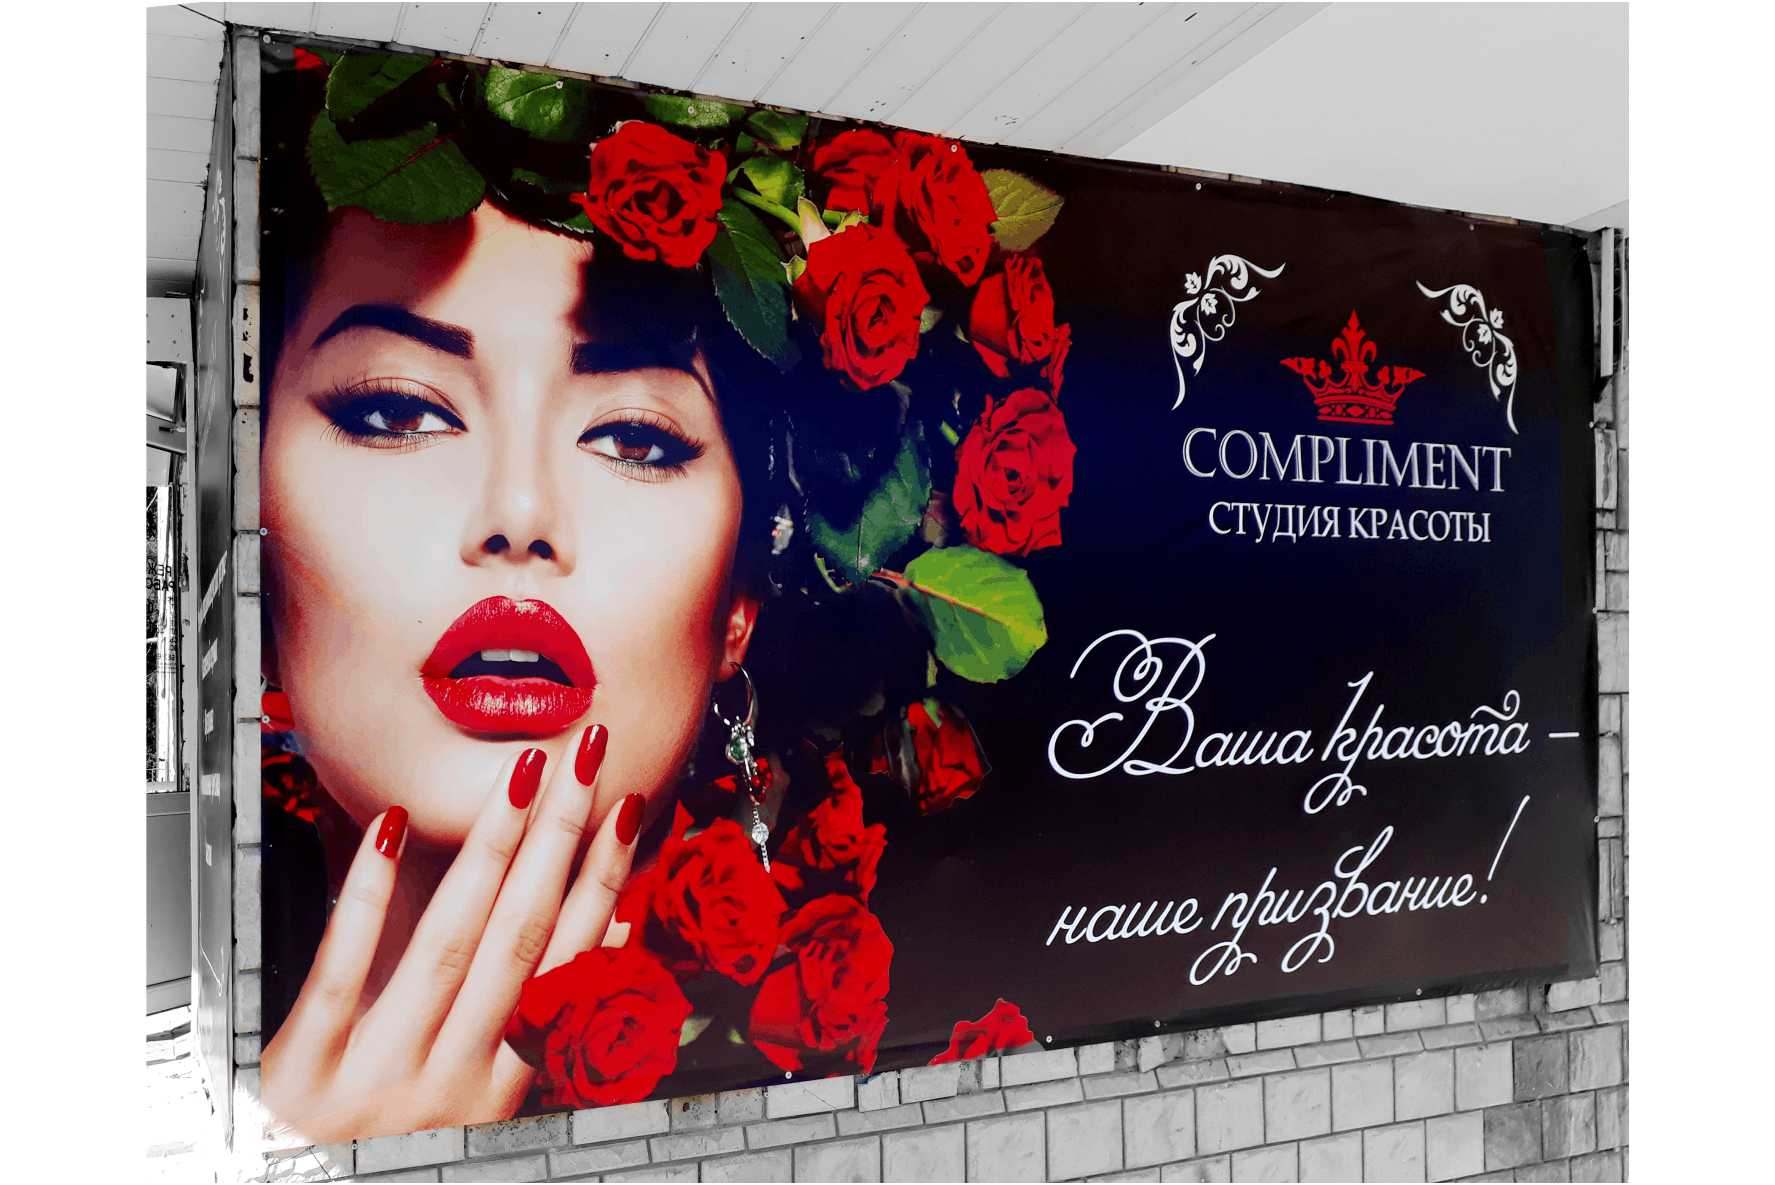 Рекламный баннер для салона красоты